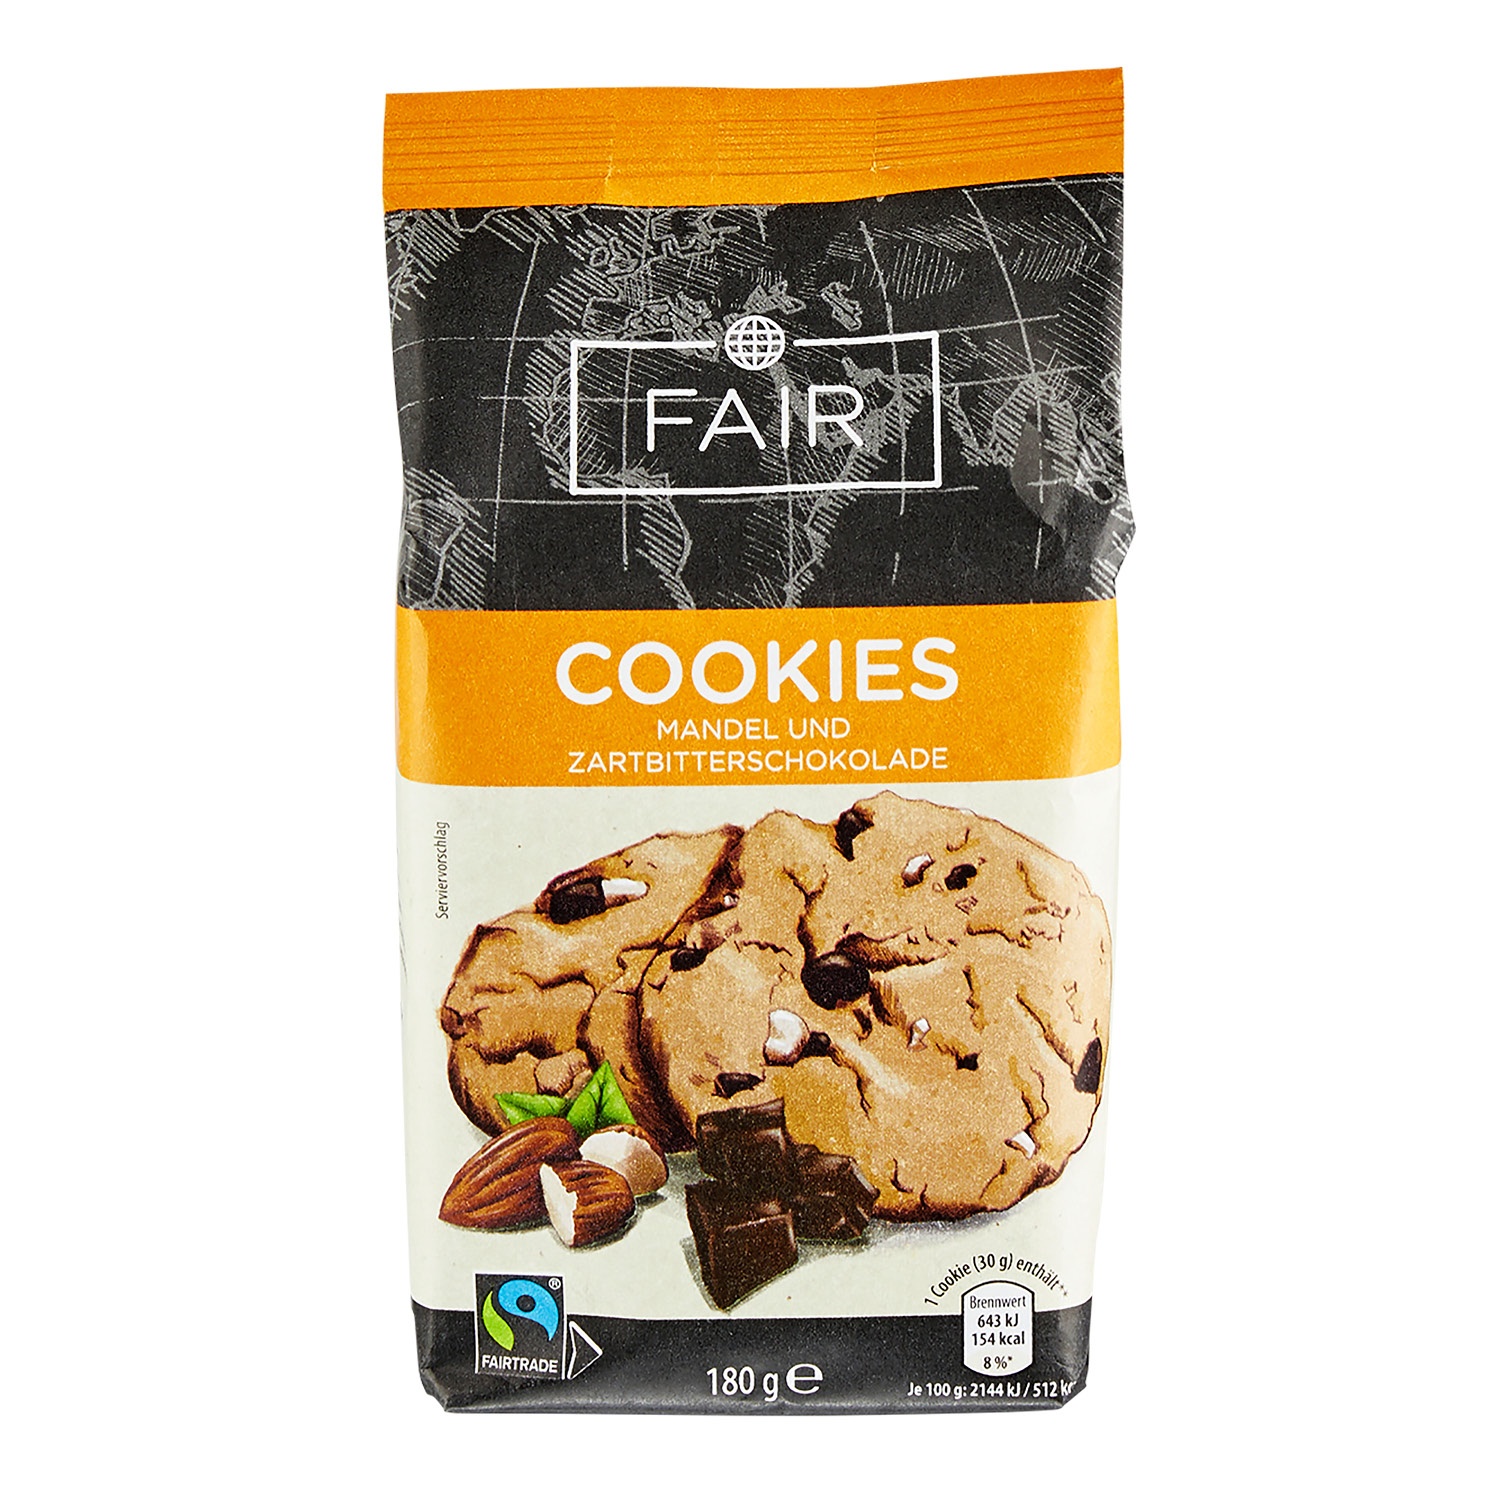 FAIR Fairtrade Cookies 180 g